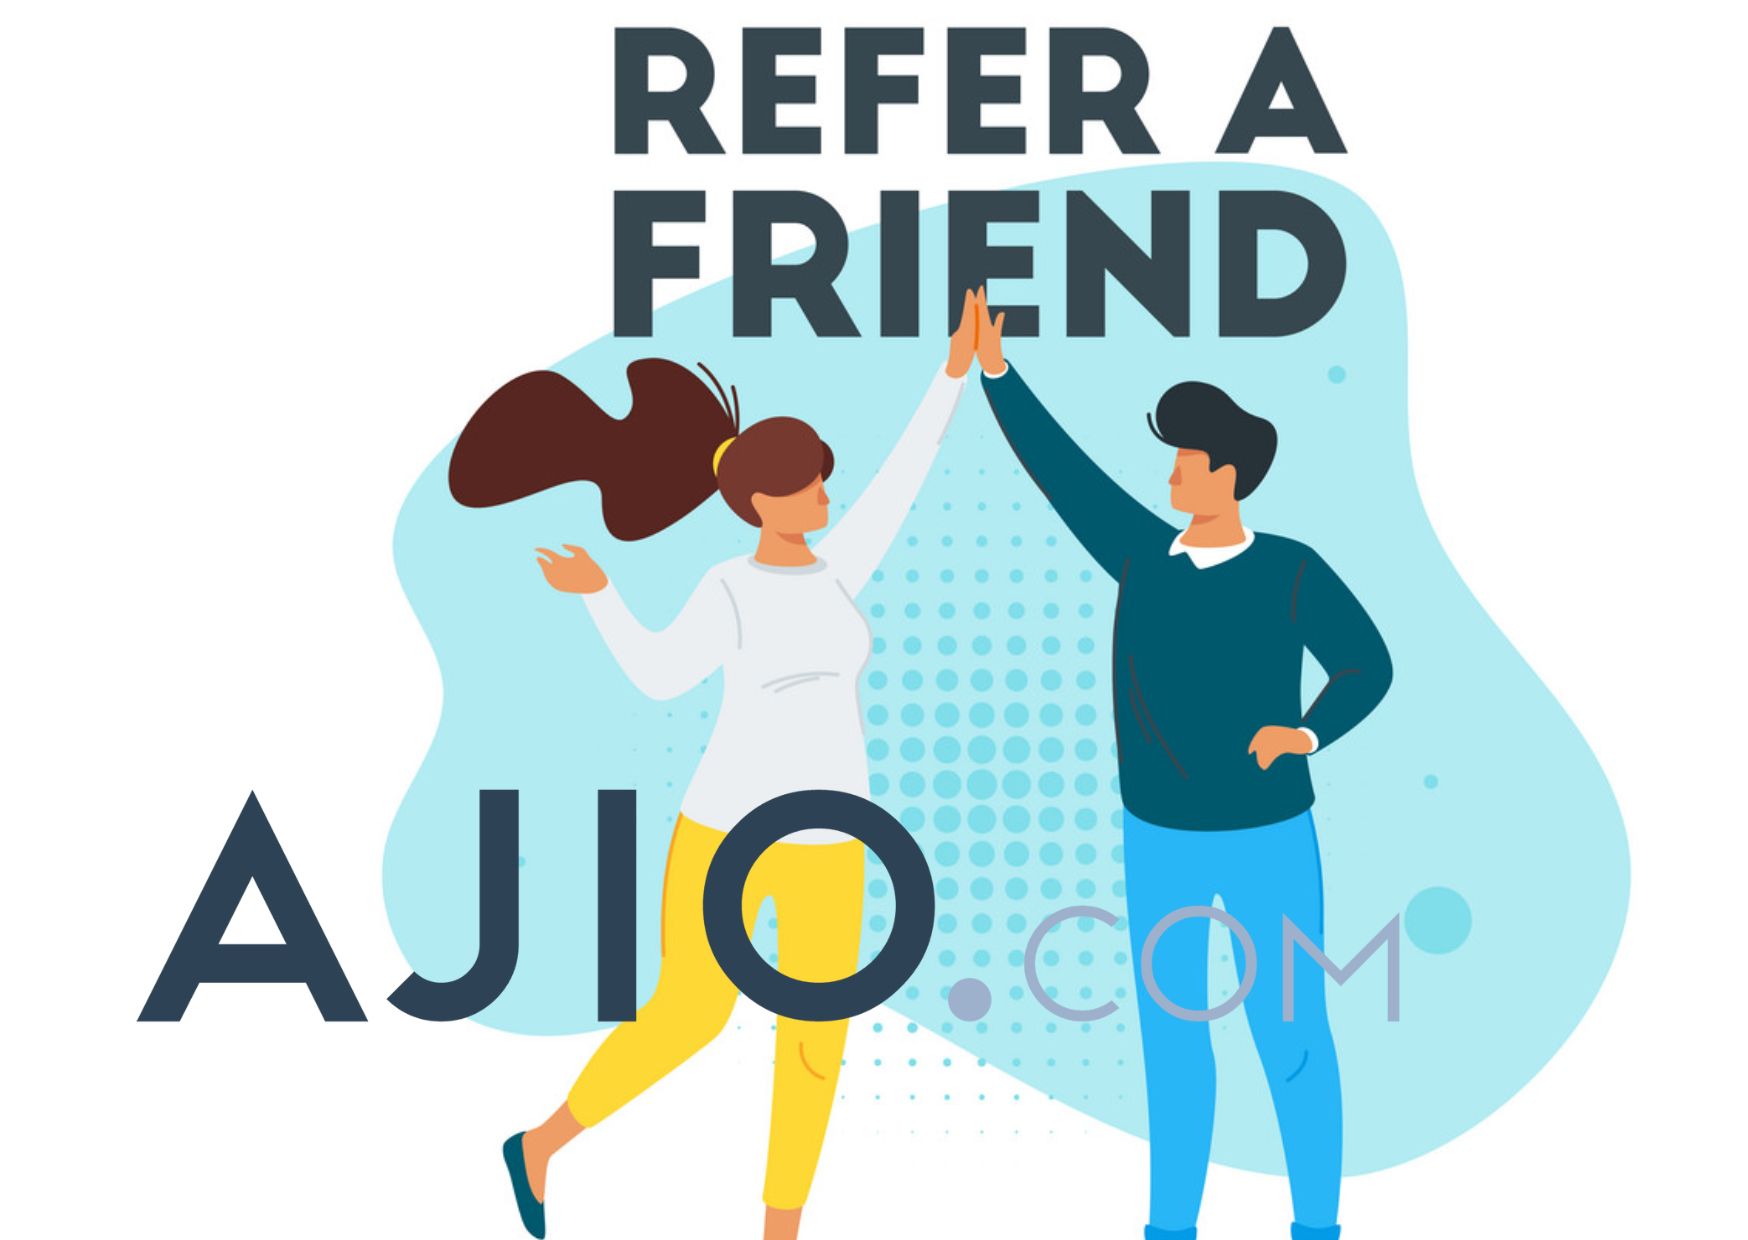 AJIO Referral Code AMA5352 - Get Upto 1500 Rewards on Signup on AJIO